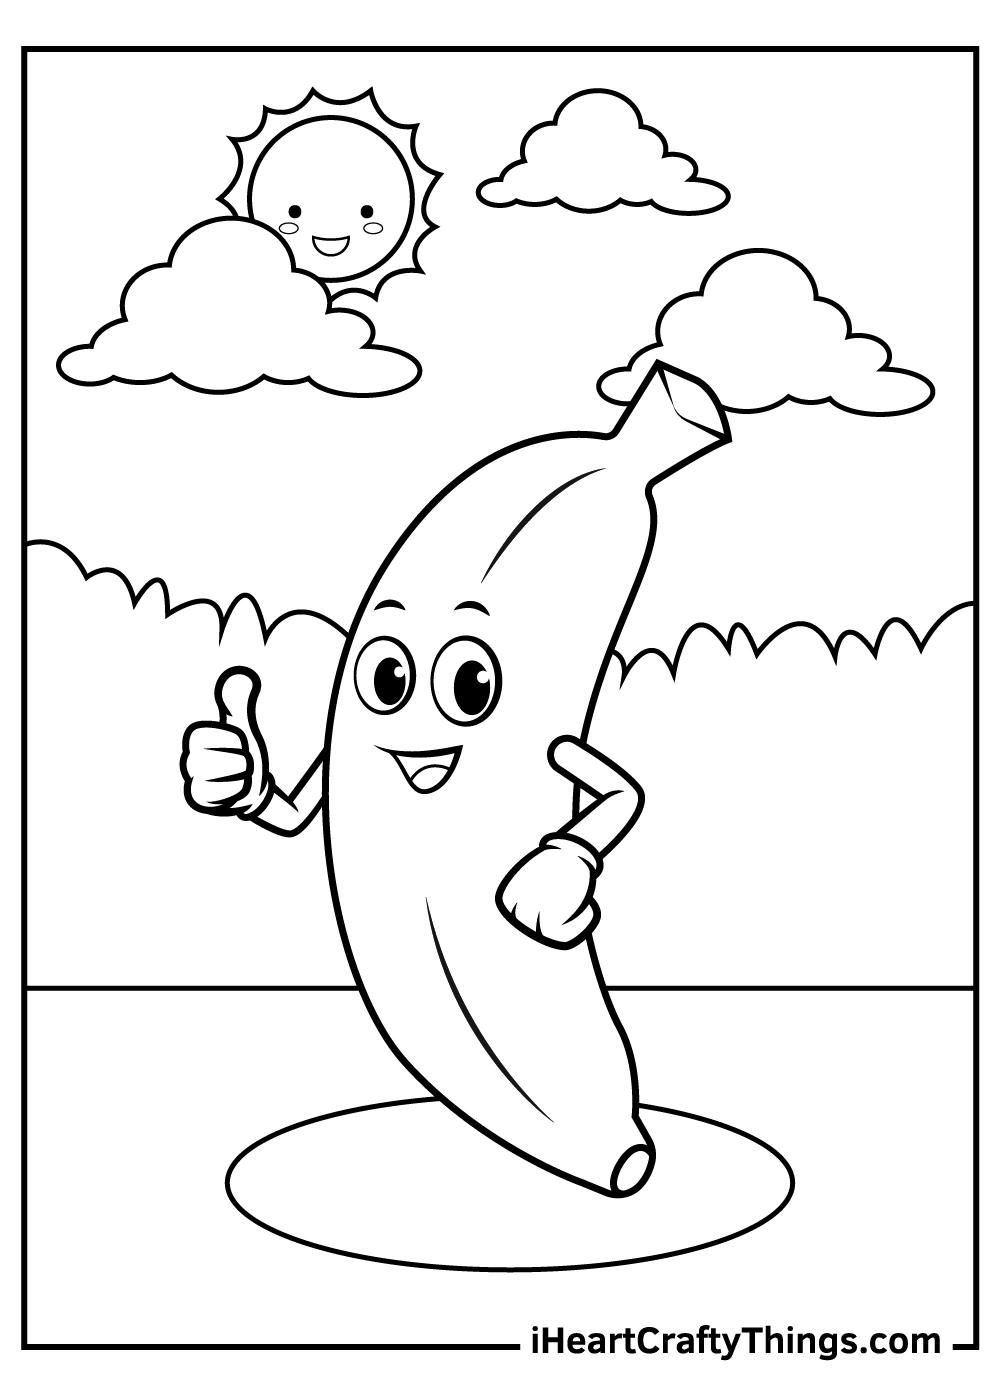 Bananas coloring pages free printables